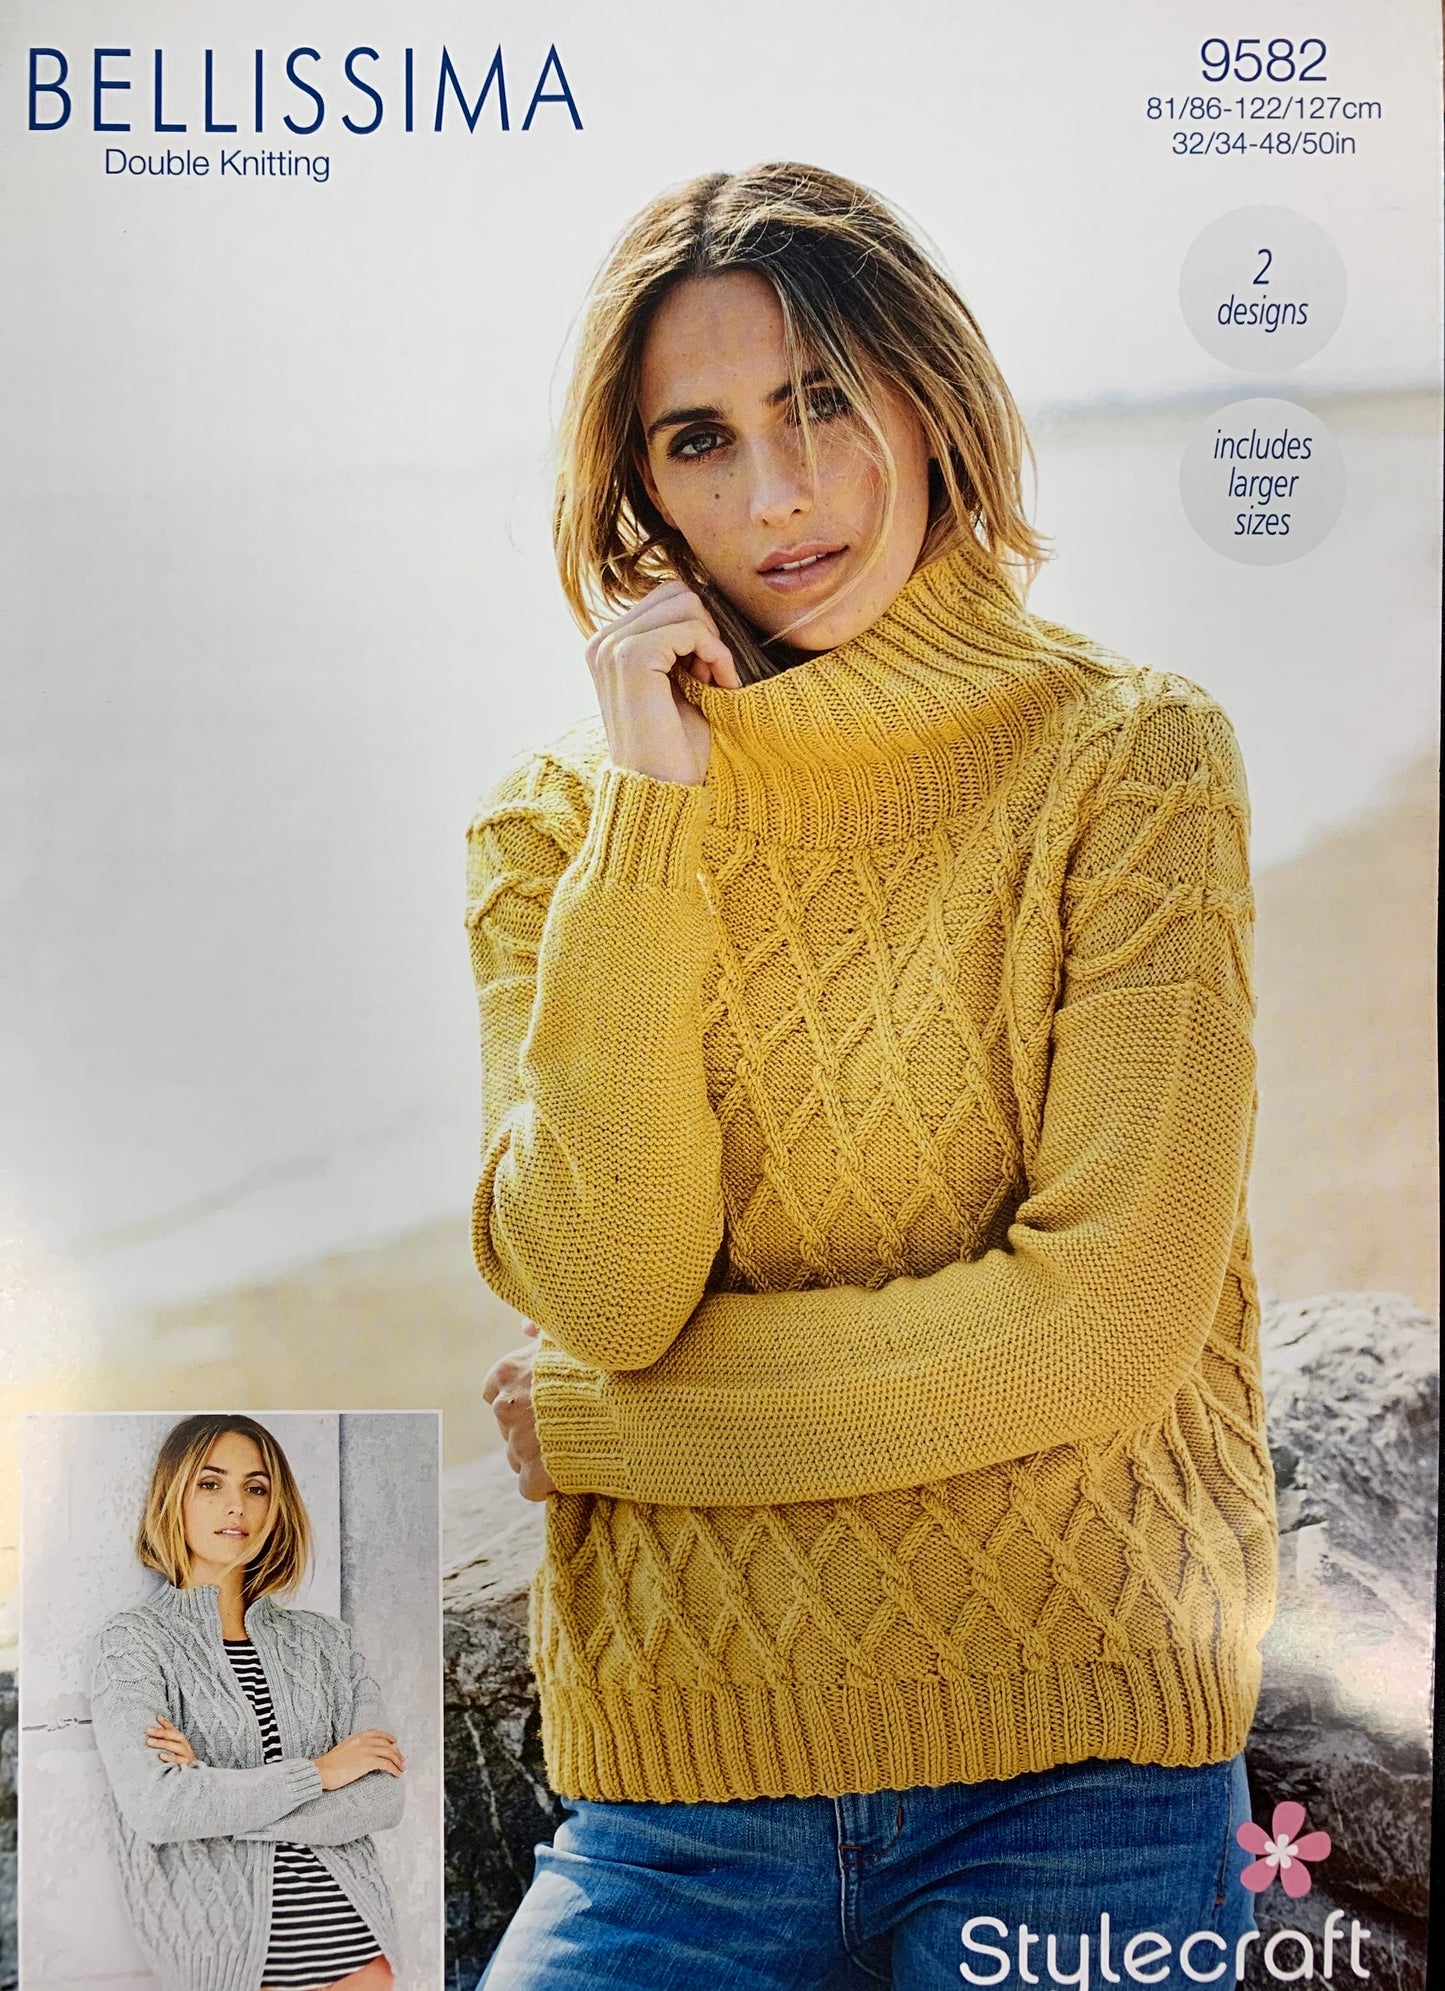 9582 Stylecraft Bellissima dk ladies sweater and jacket knitting pattern